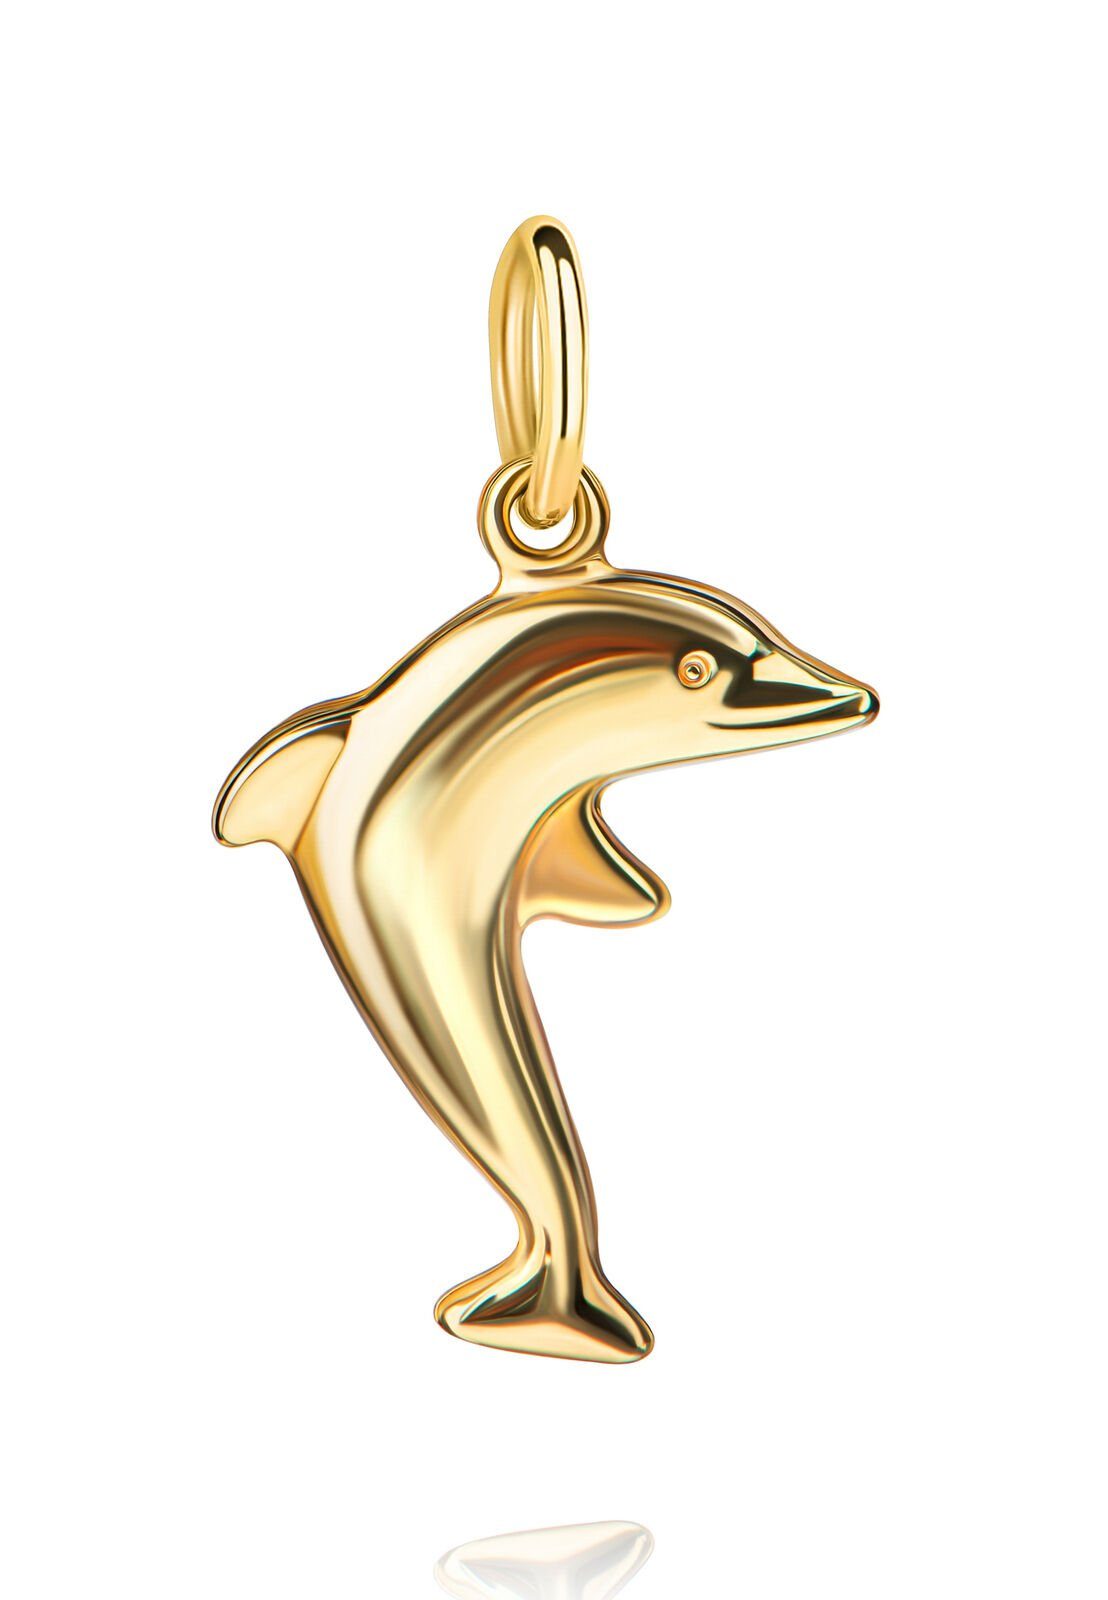 Delfin - Kinder (vergoldeter JEVELION Germany in für Mädchen), Kettenanhänger Made vergoldet Silberanhänger, Anhänger Schmuckanhänger Silber -